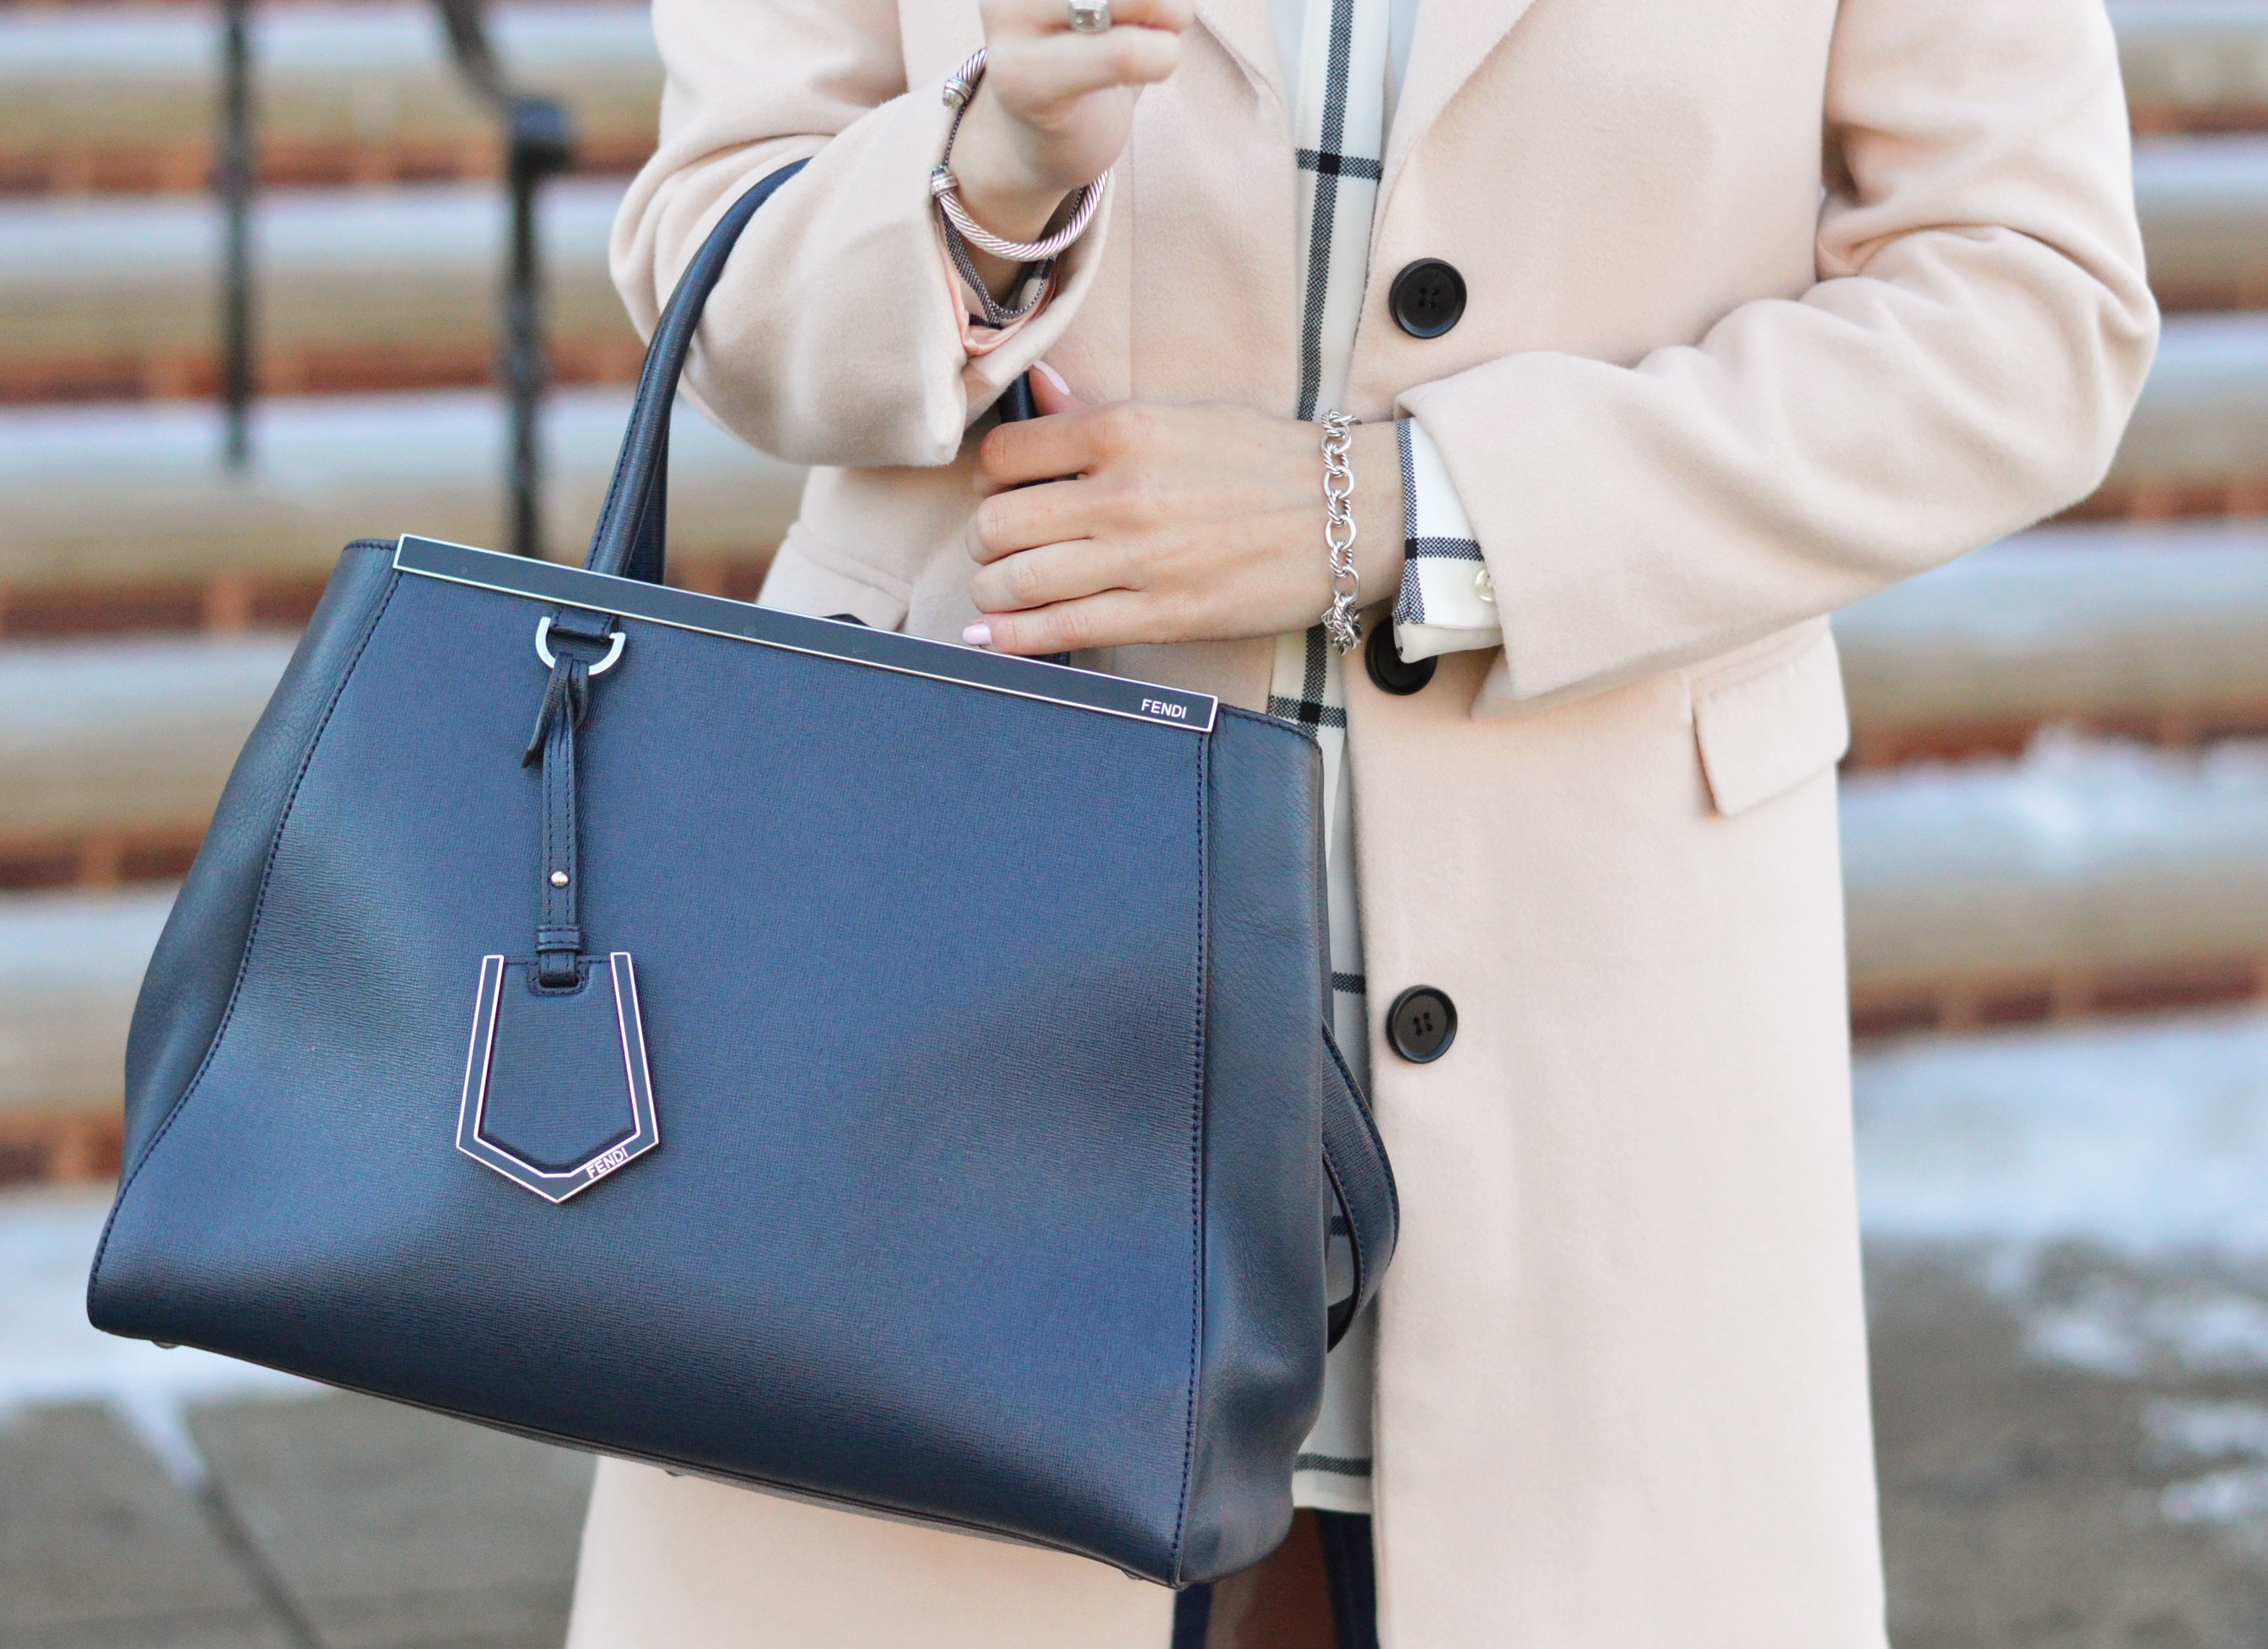 Trendlee Luxury Preowned Handbags